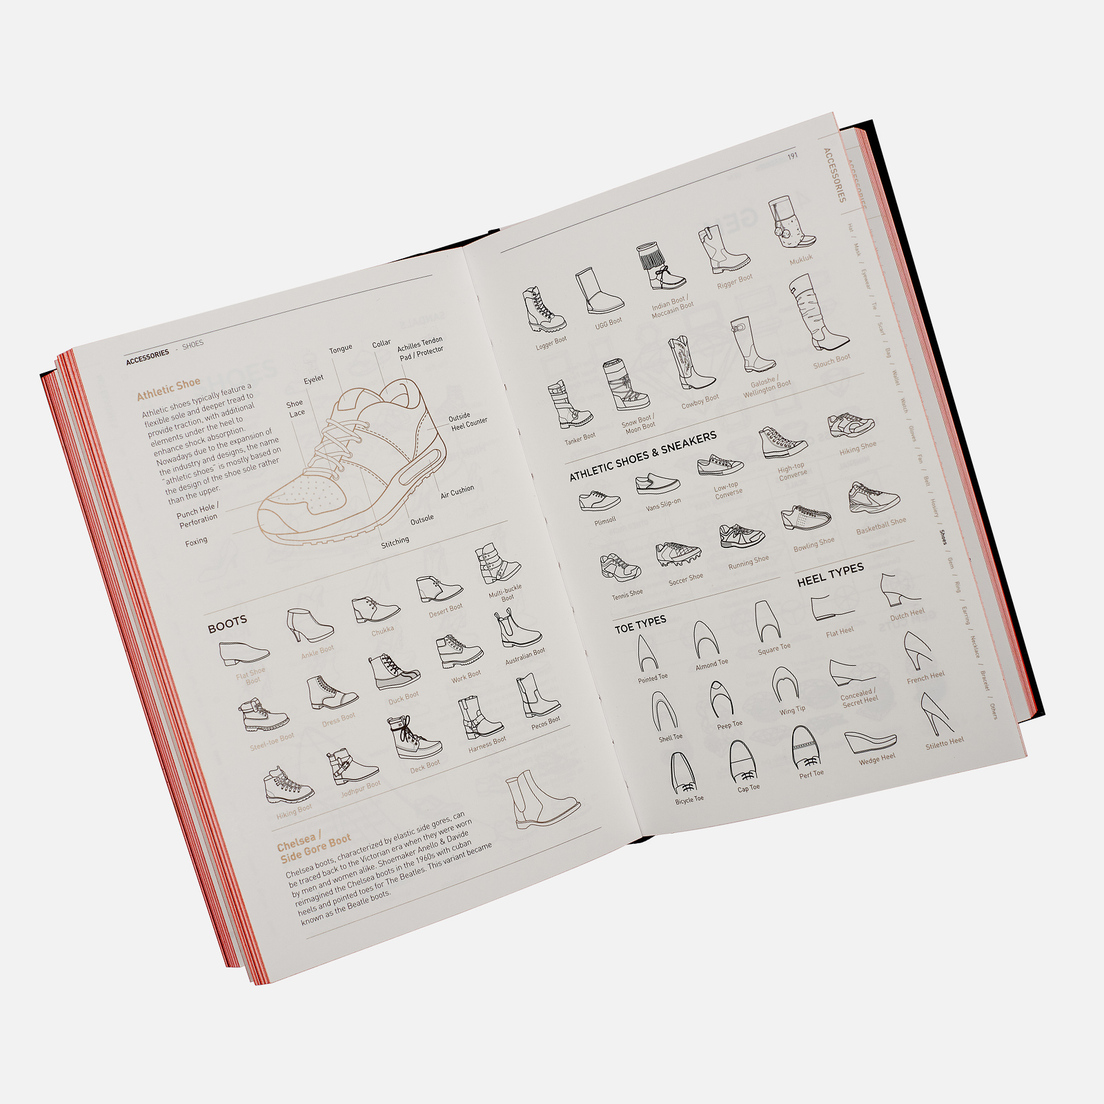 Fashionary Книга Fashionpedia: The Visual Dictionary Of Fashion Design